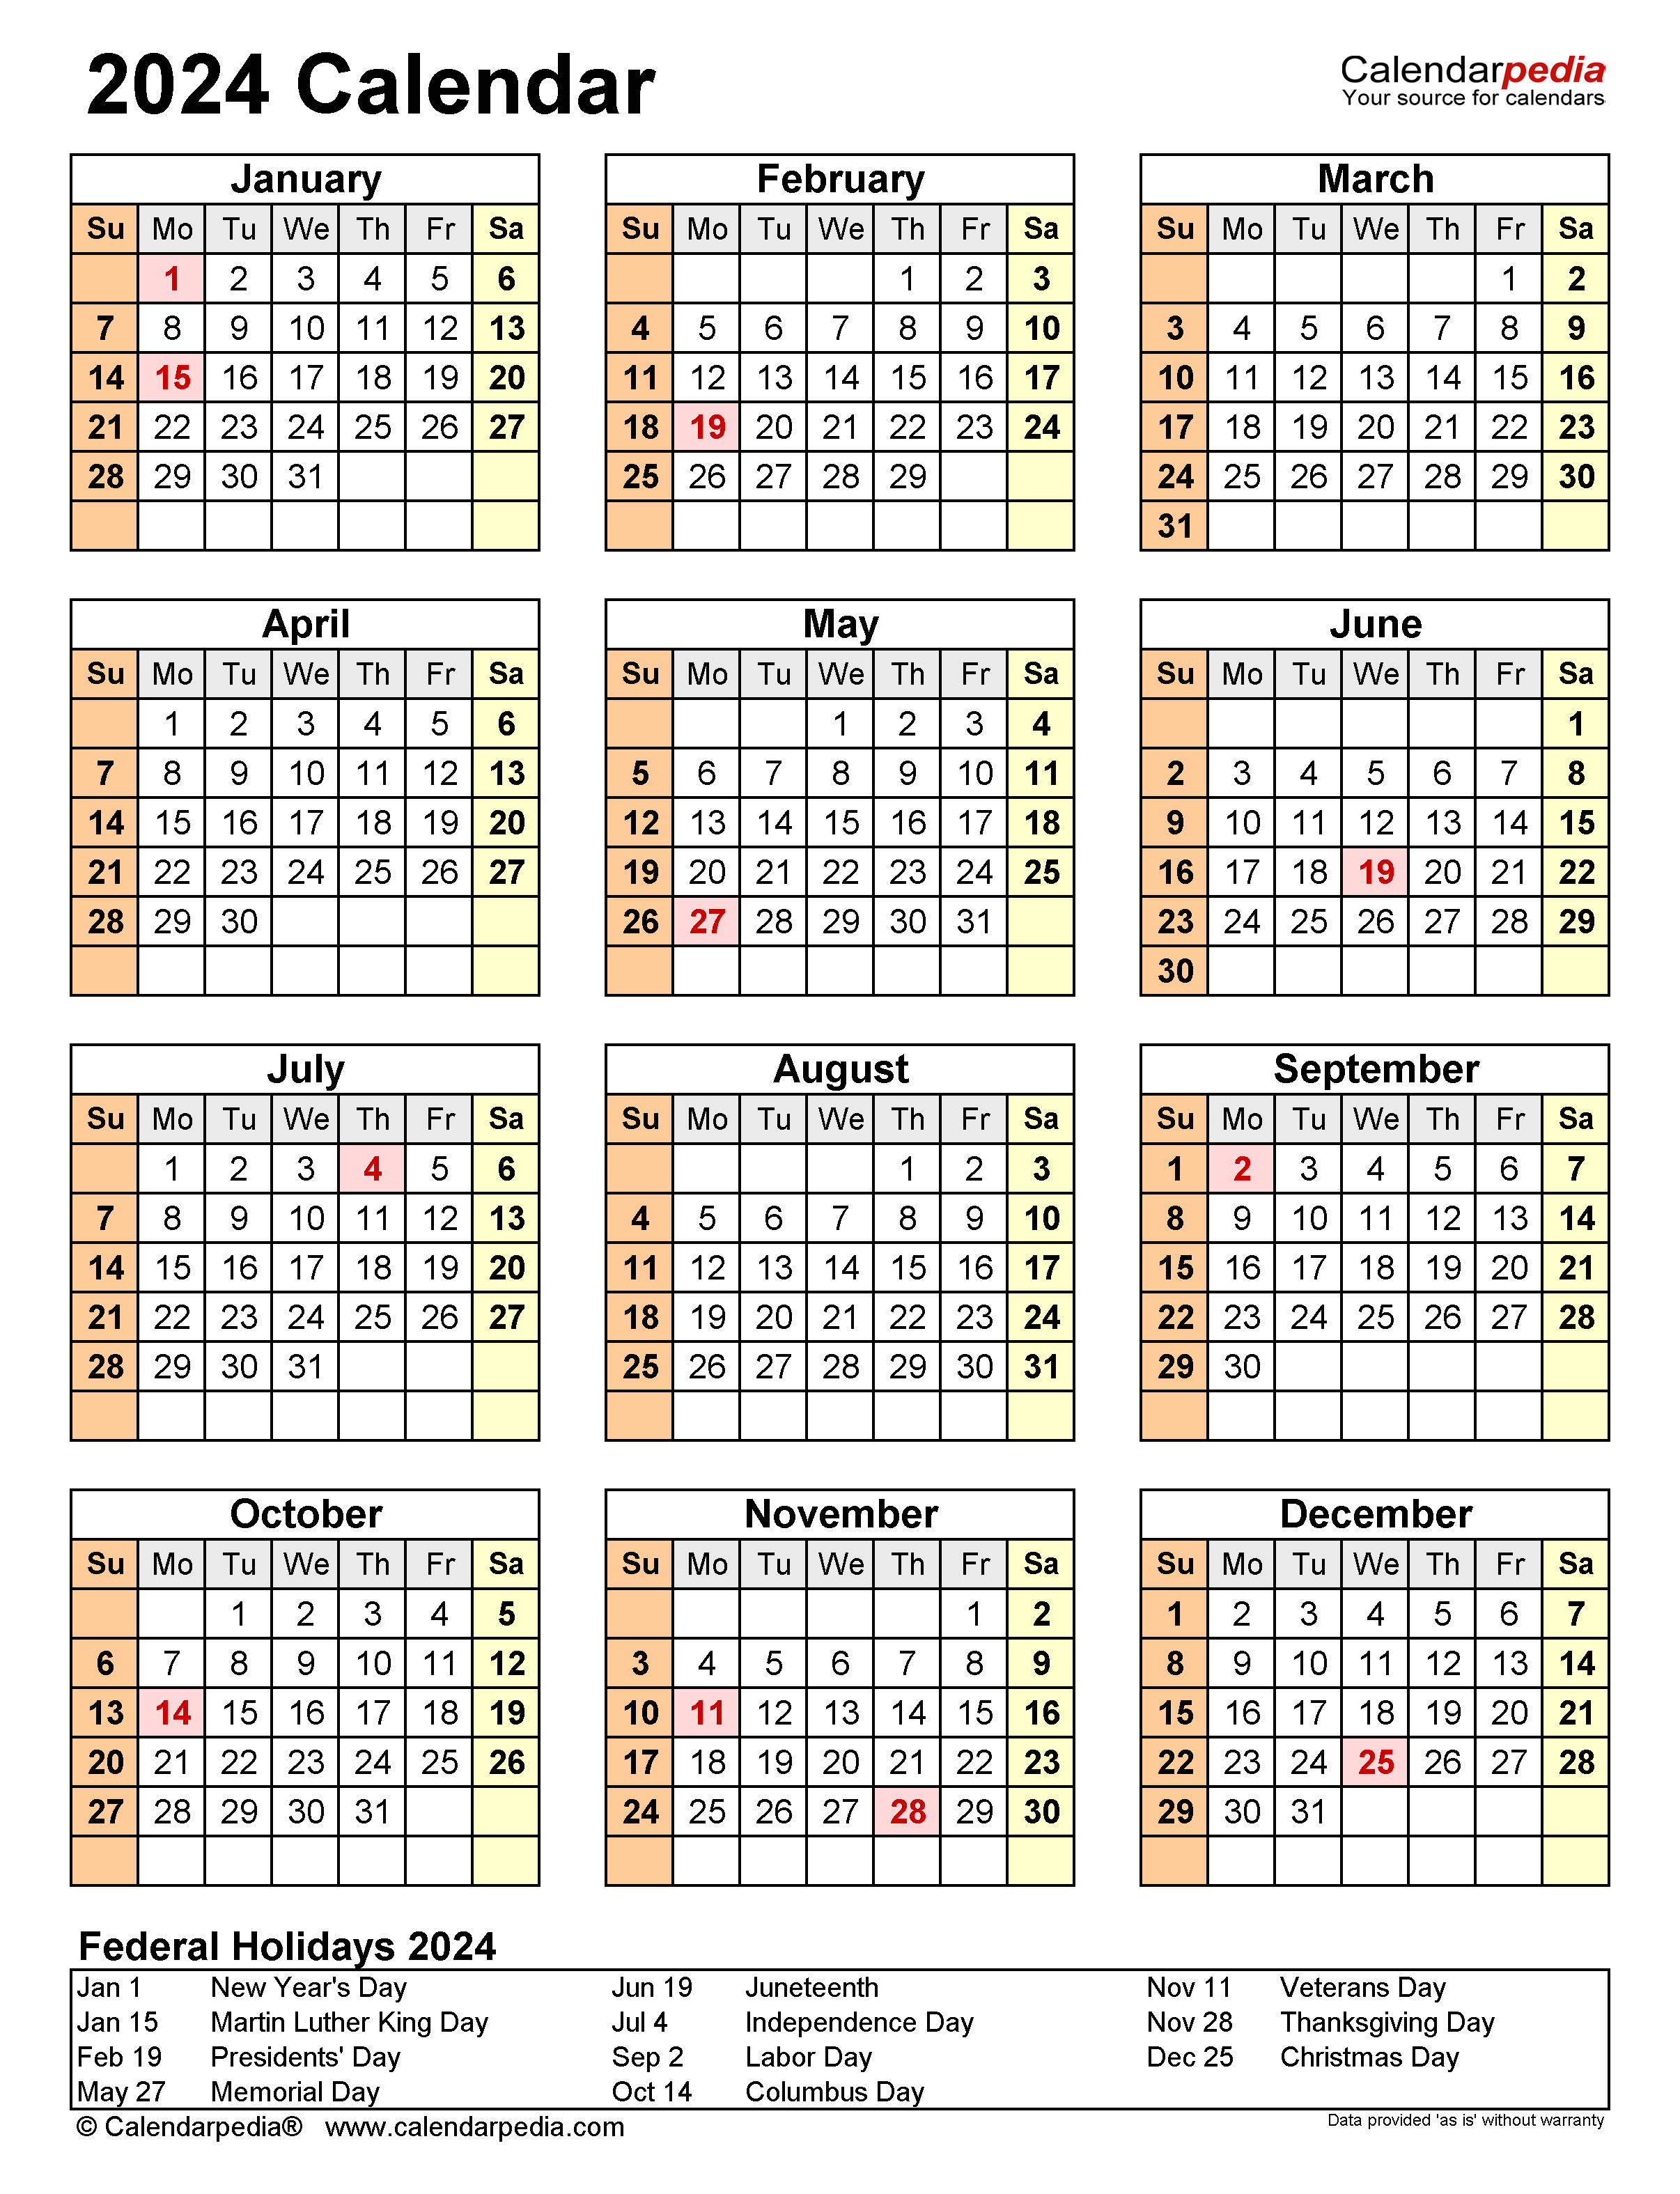 Free Printable 2024 Calendar With Holidays Crownflourmills - Free Printable 2024 Calendar With Holidays December